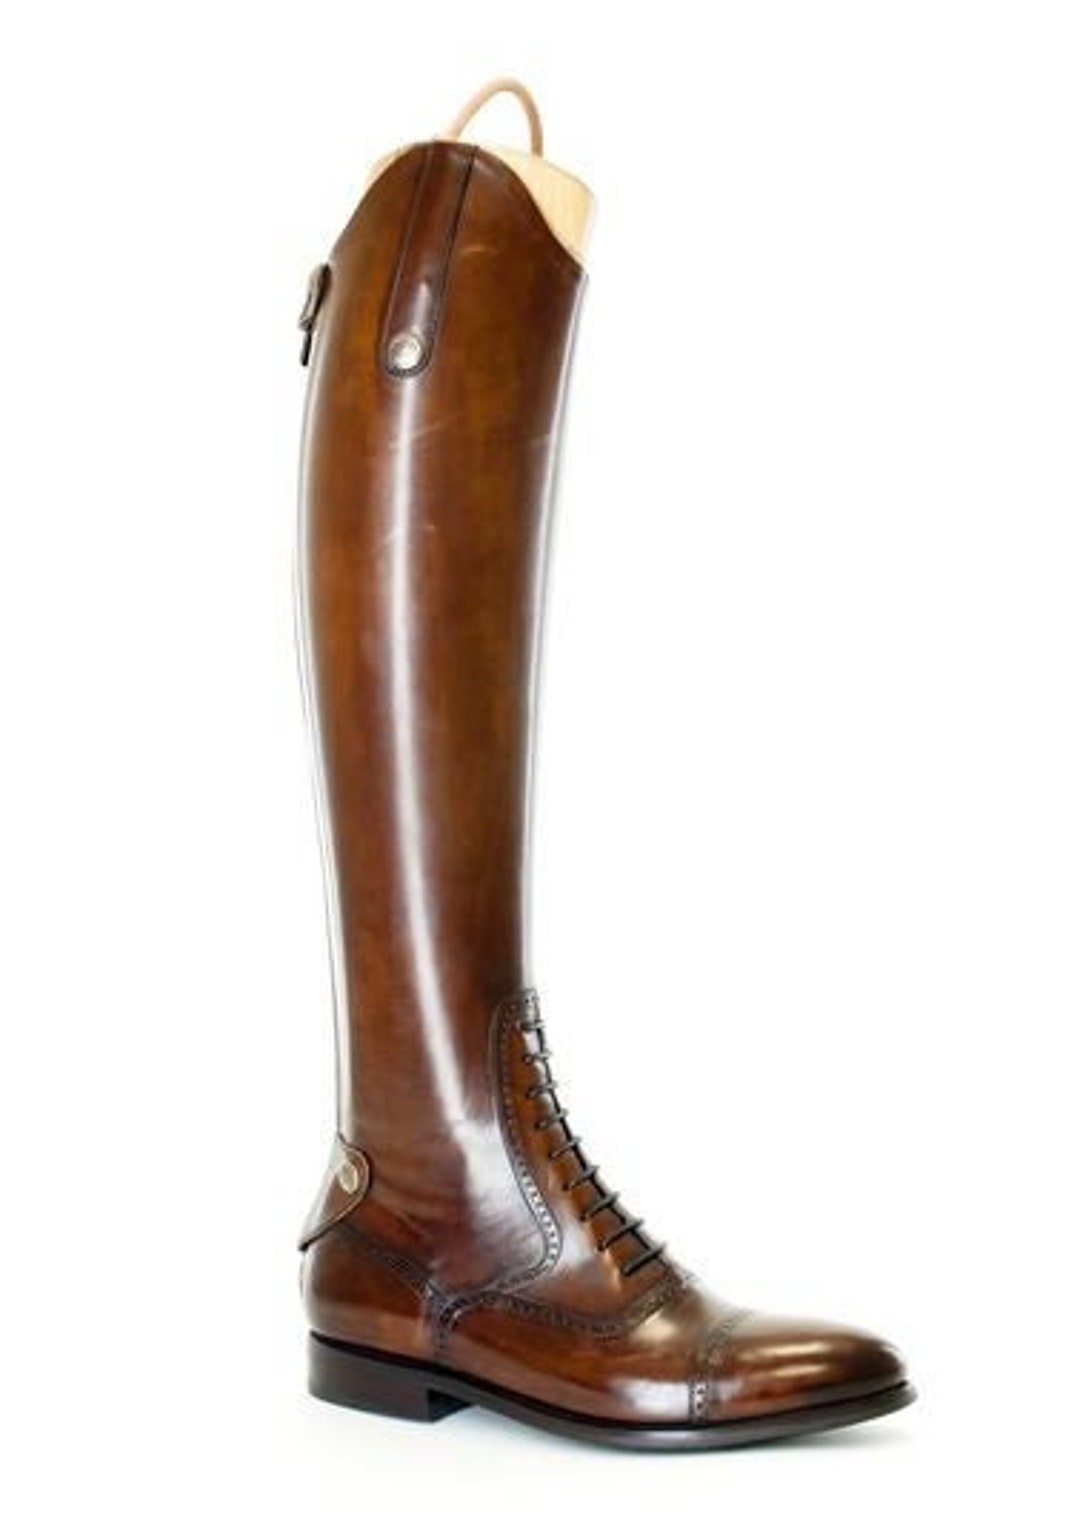 Bespoke New Handmade Men's Riding Boot Style Leather Boots - Etsy UK